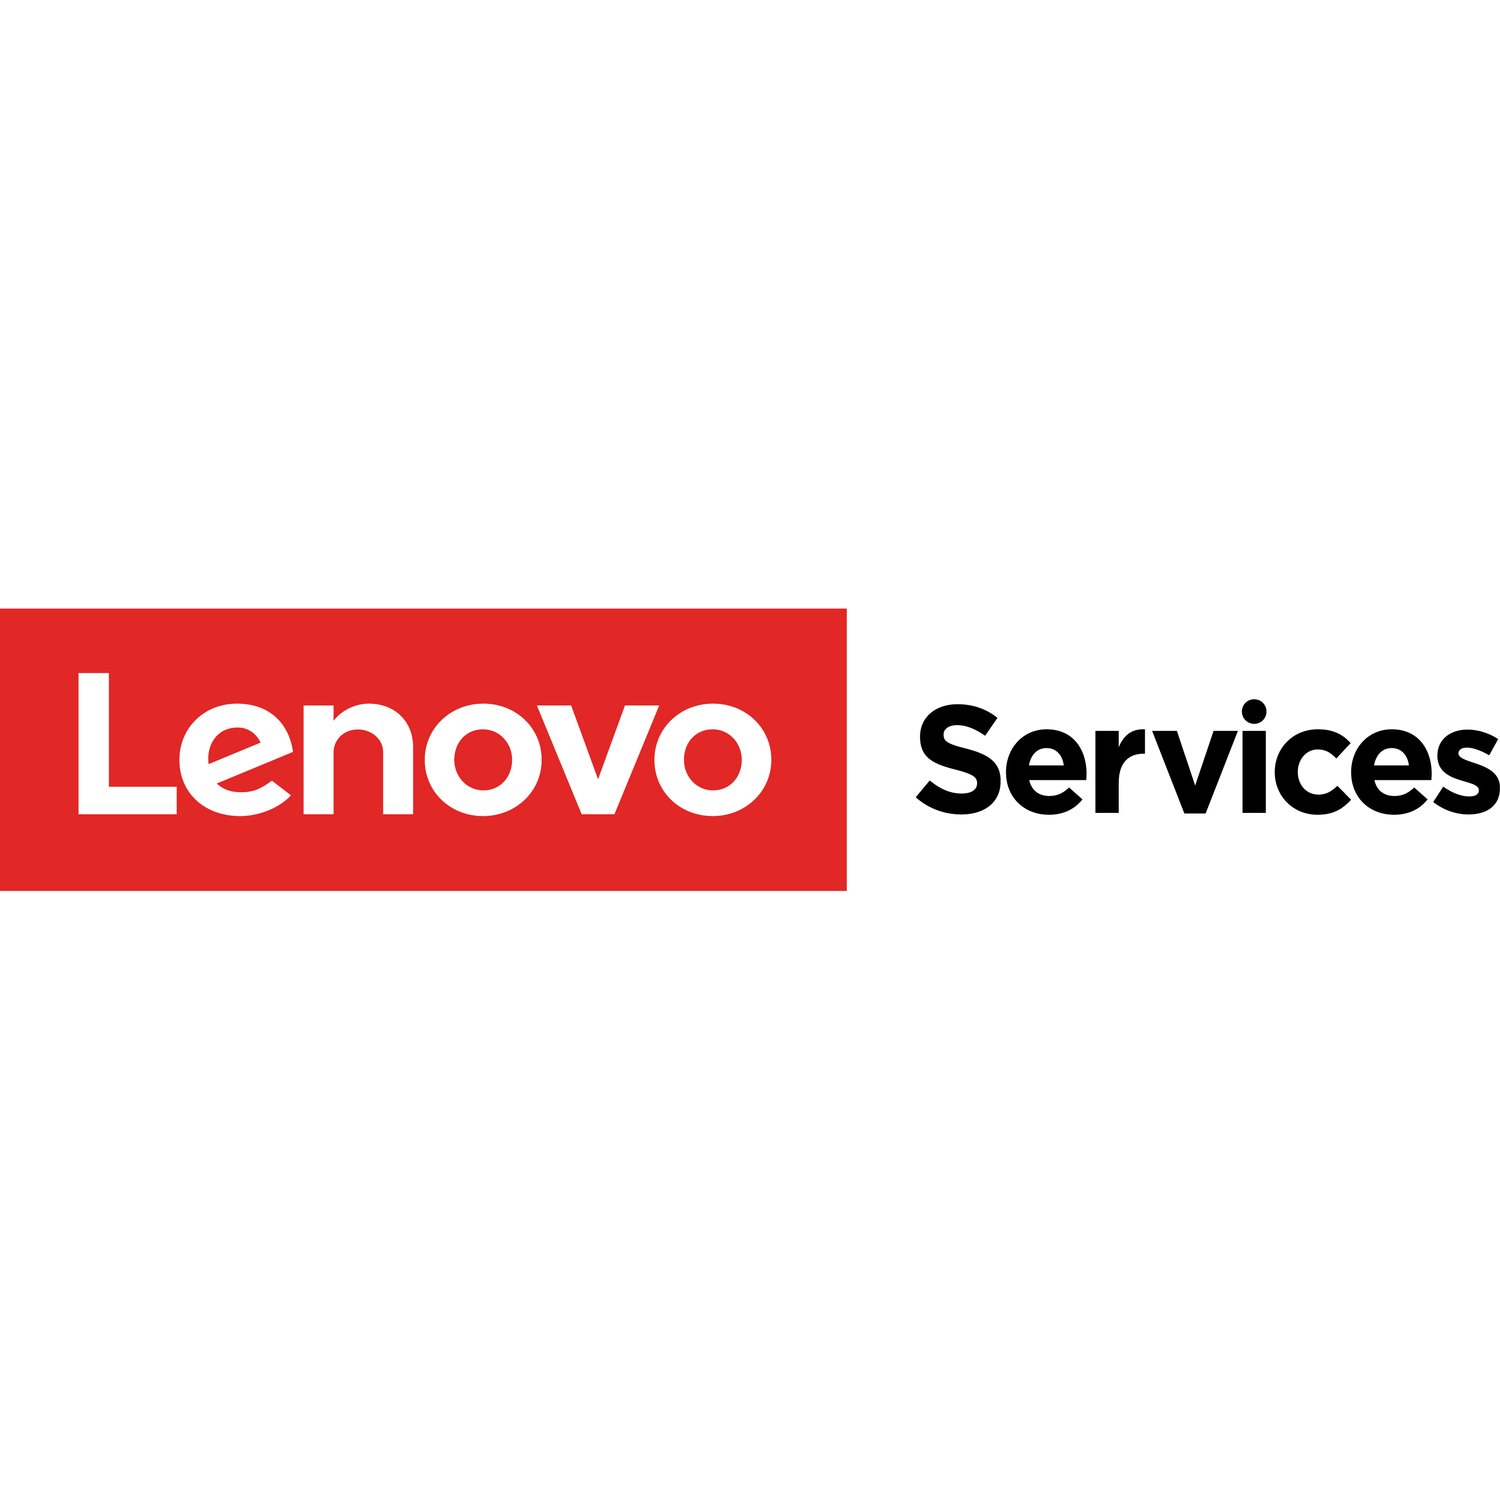 Lenovo International Services Entitlement - Extended Warranty (Upgrade) - 4 Year - Warranty